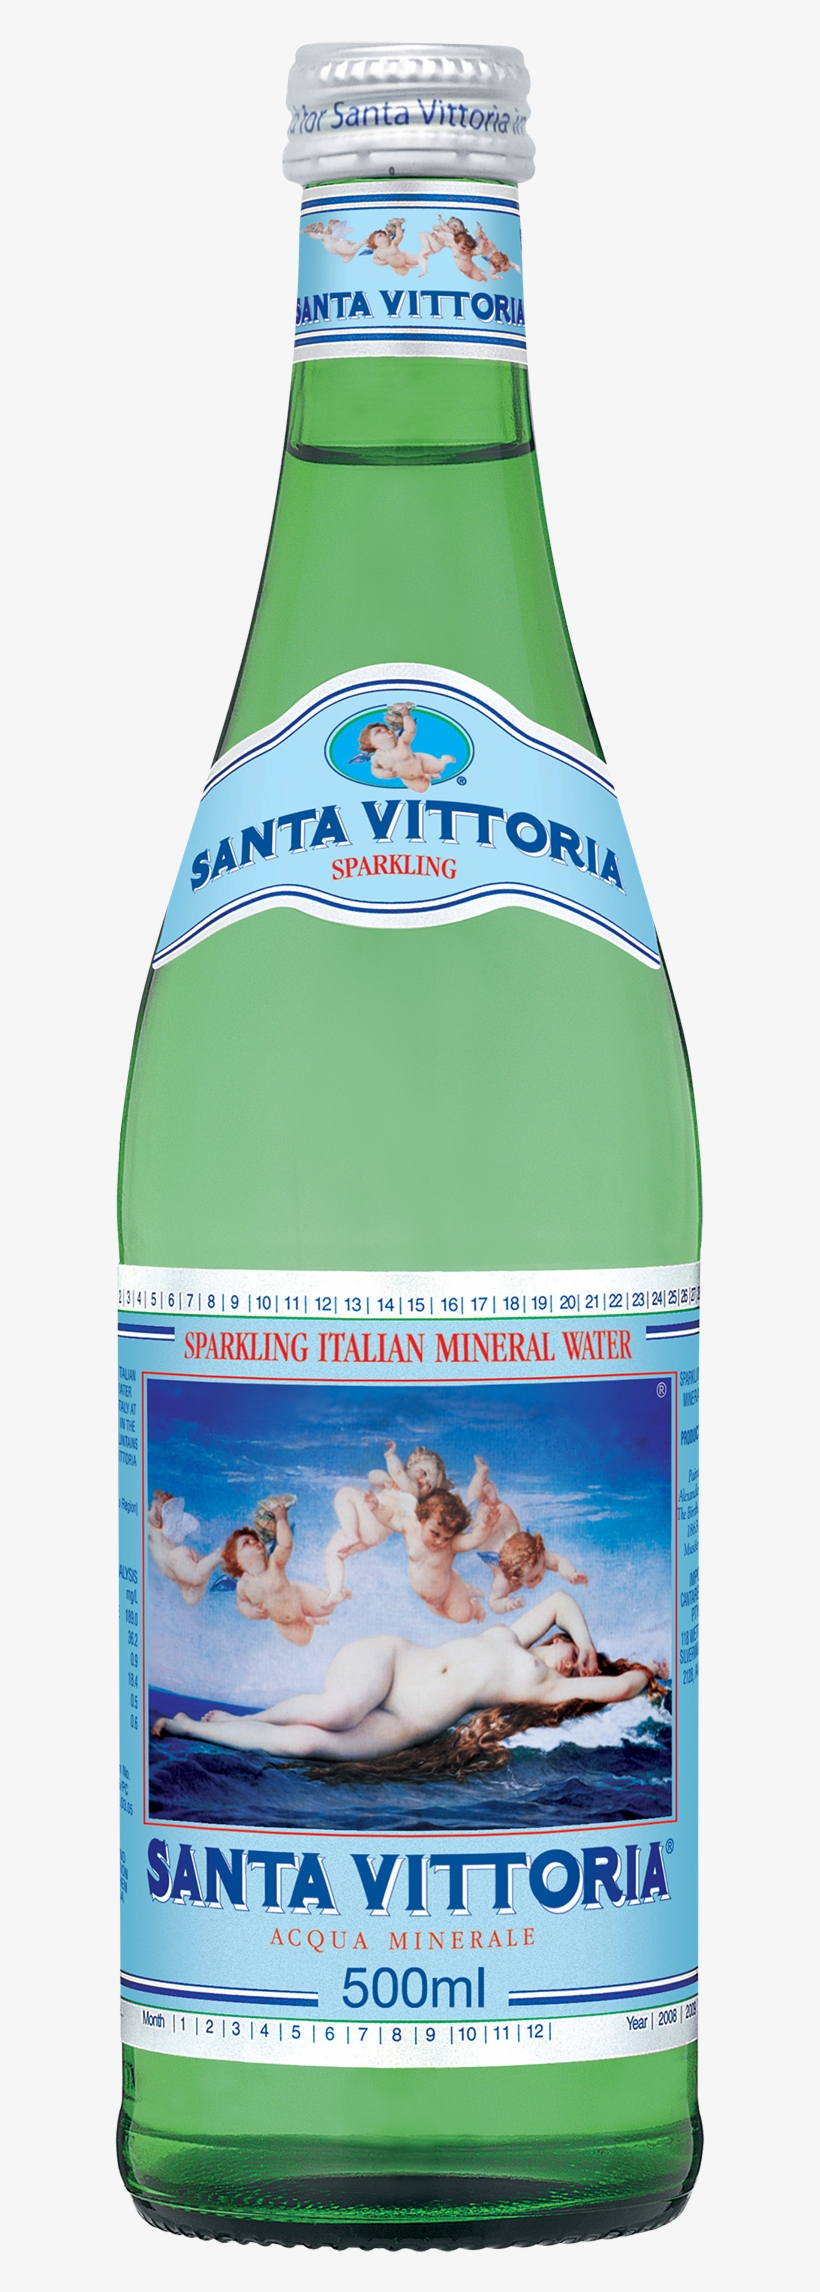 Stay Fresh With Santa Vittoria - Santa Vittoria Sparkling Water, transparent png #1735274